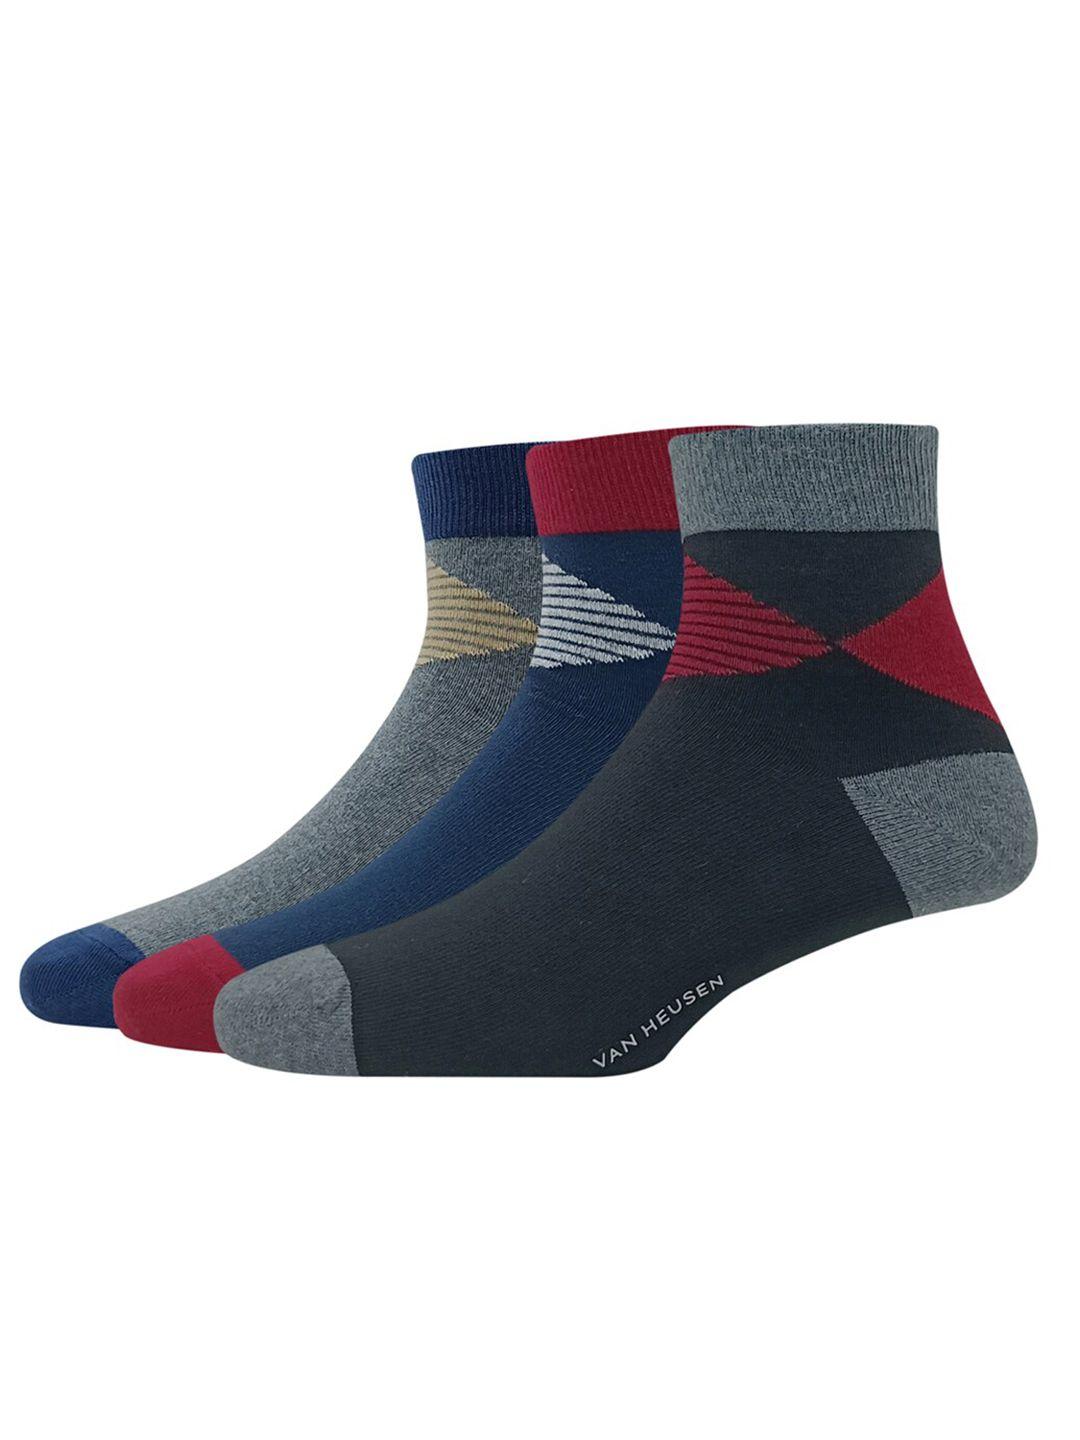 van-heusen-men-pack-of-3-patterned-above-ankle-length-socks